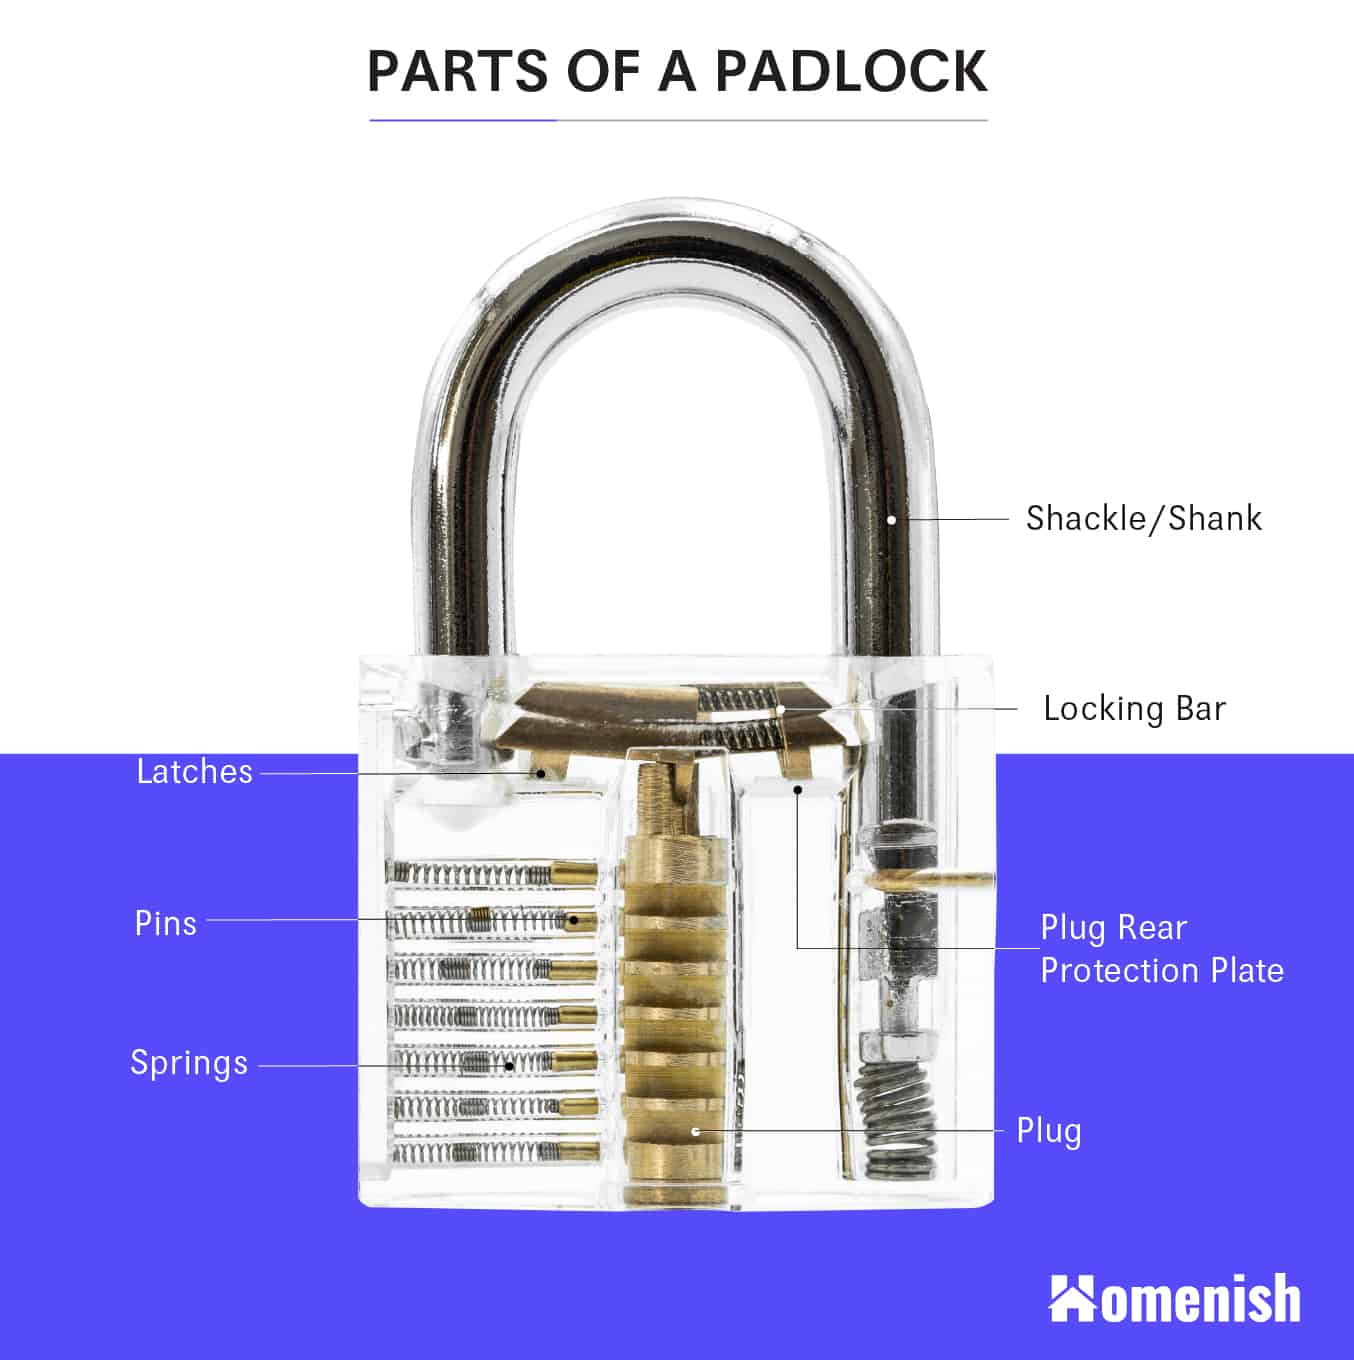 Anatomy of a Padlock